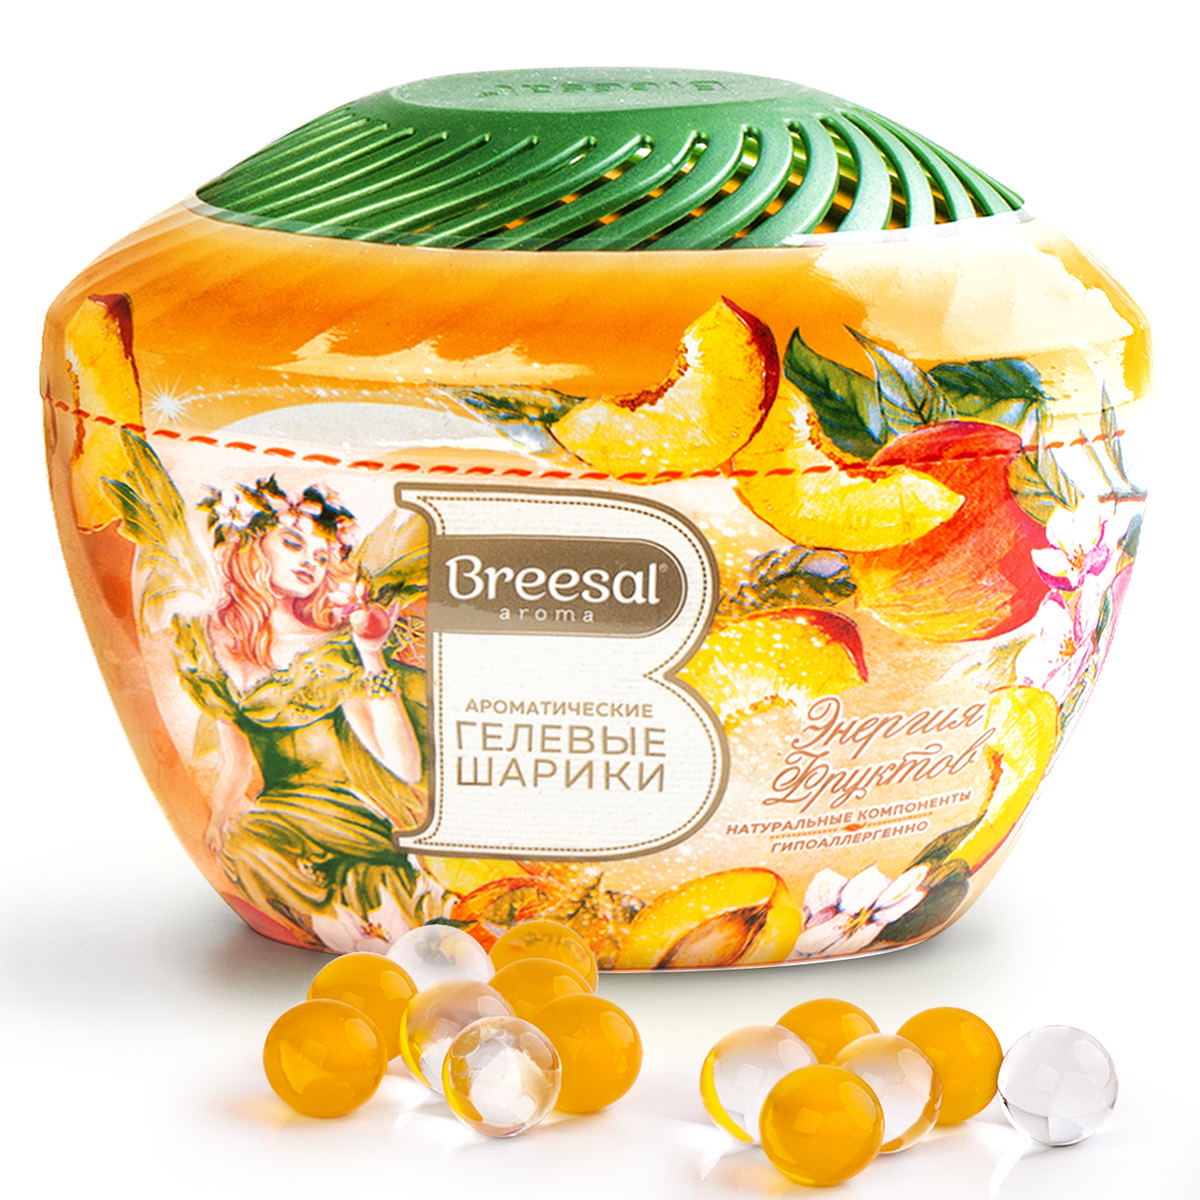 Ароматические гелевые шарики Breesal Fresh Drops Энергия фруктов, 215 мл ароматические гелевые шарики для дома breesal цитрусовый микс 160 мл